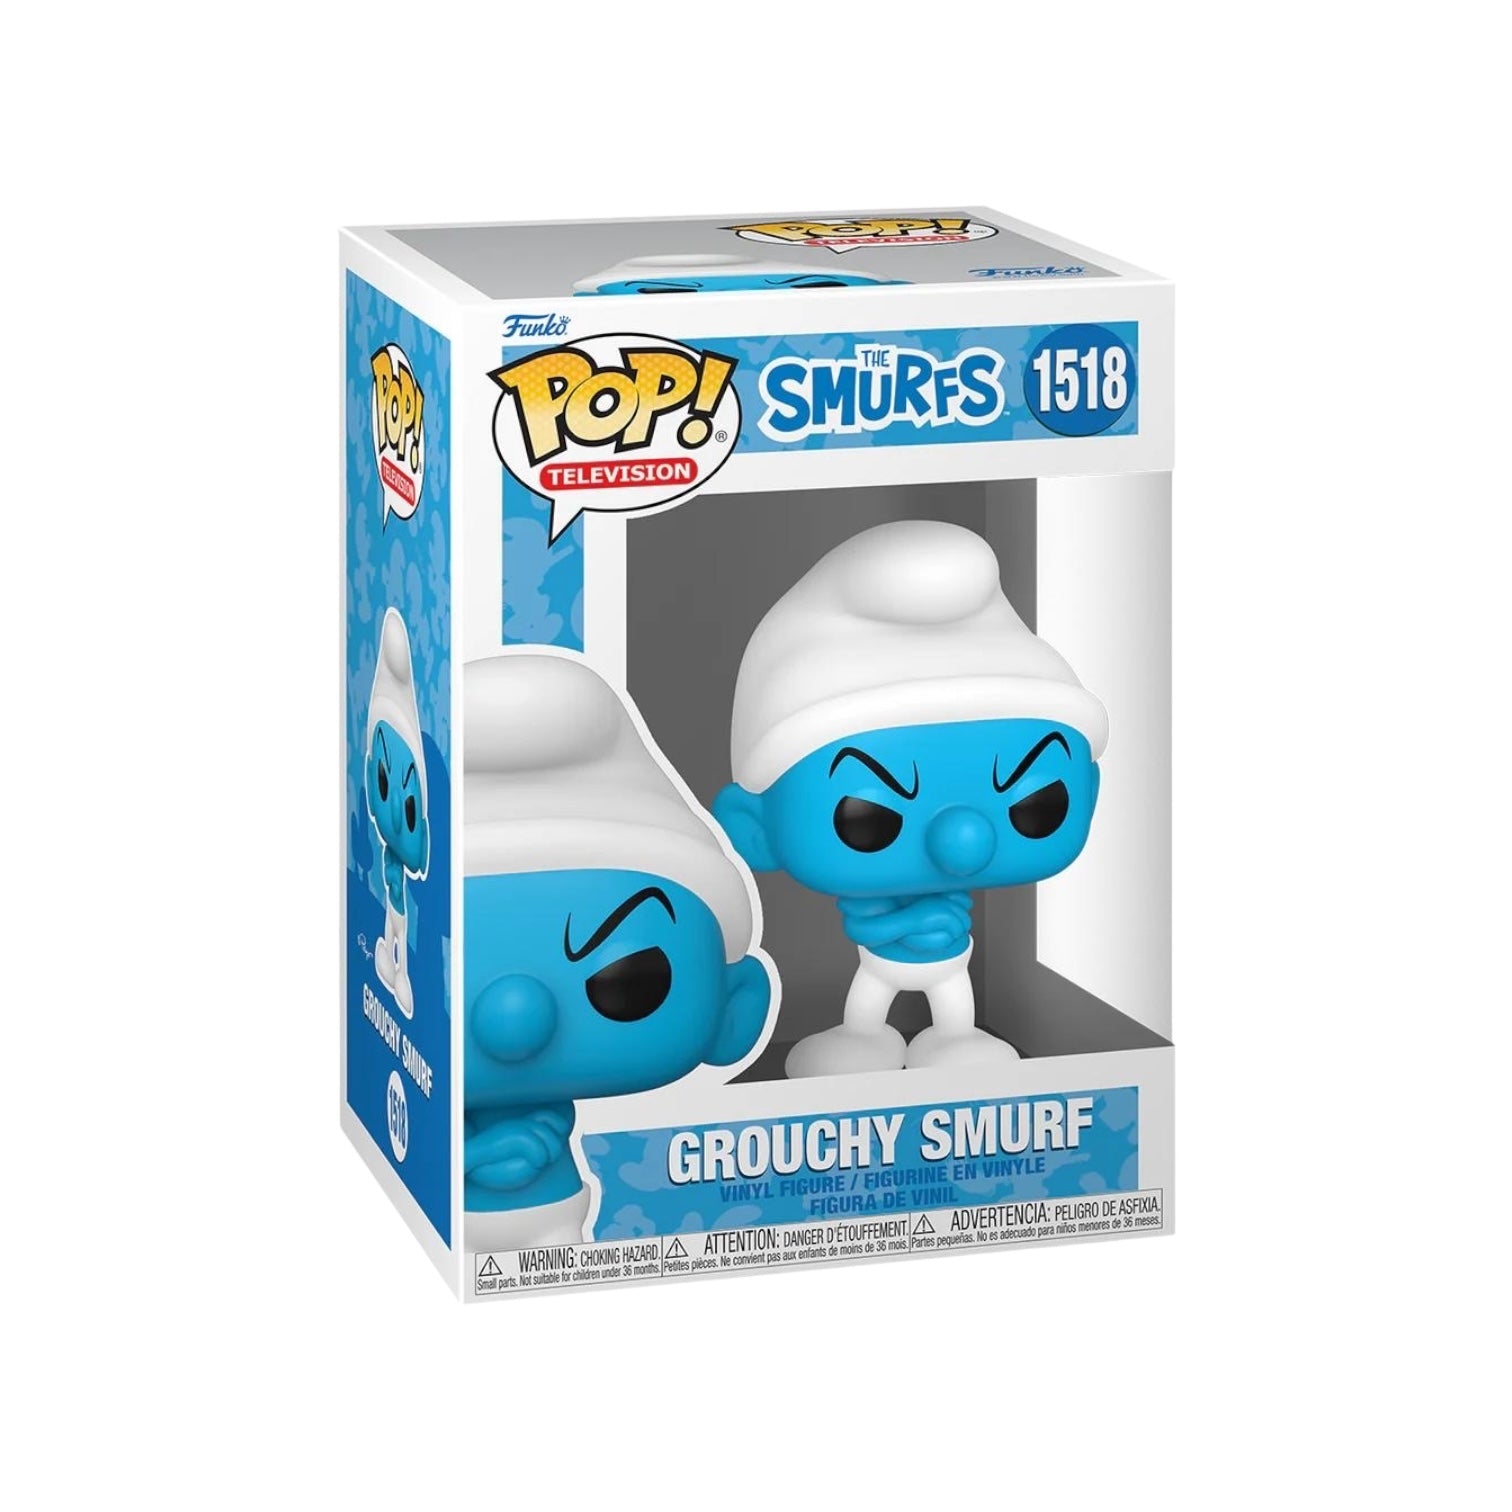 Grouchy Smurf #1518 Funko Pop!  - The Smurfs - PREORDER